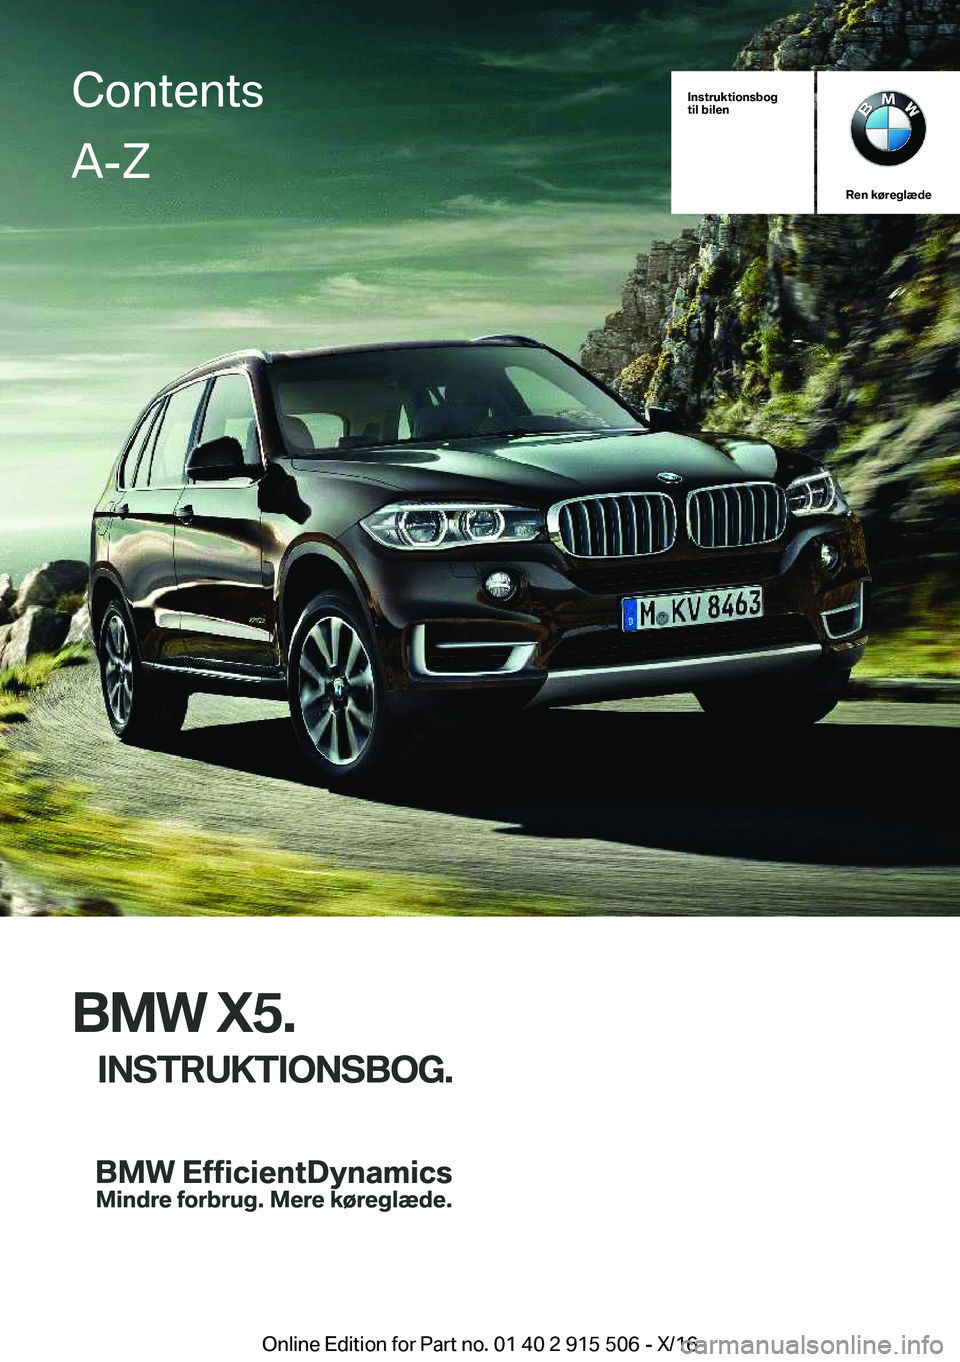 BMW X5 2017  InstruktionsbØger (in Danish) �I�n�s�t�r�u�k�t�i�o�n�s�b�o�g
�t�i�l��b�i�l�e�n
�R�e�n��k�